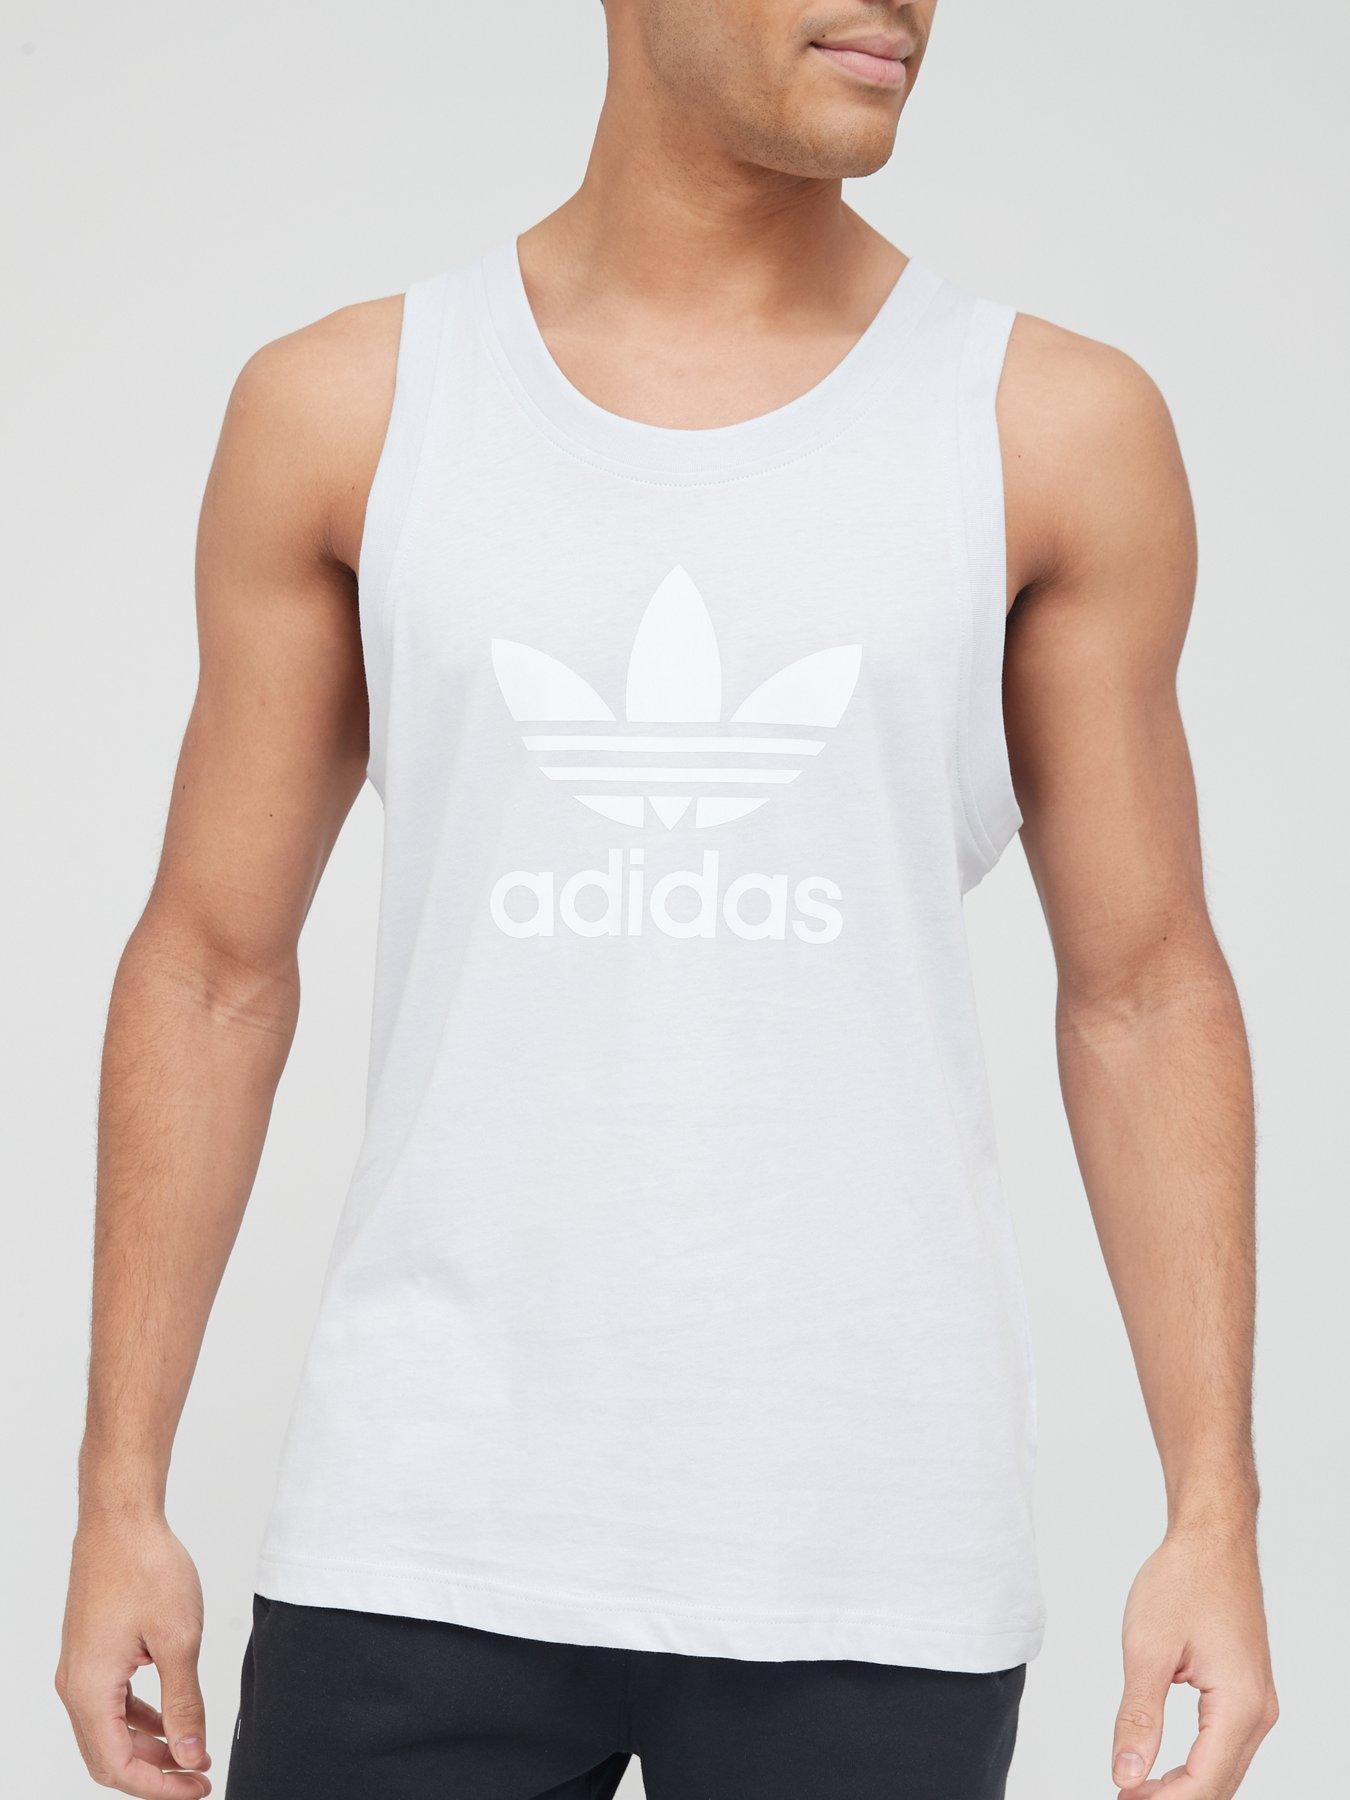 Adidas Men's Tank Top - White - XL